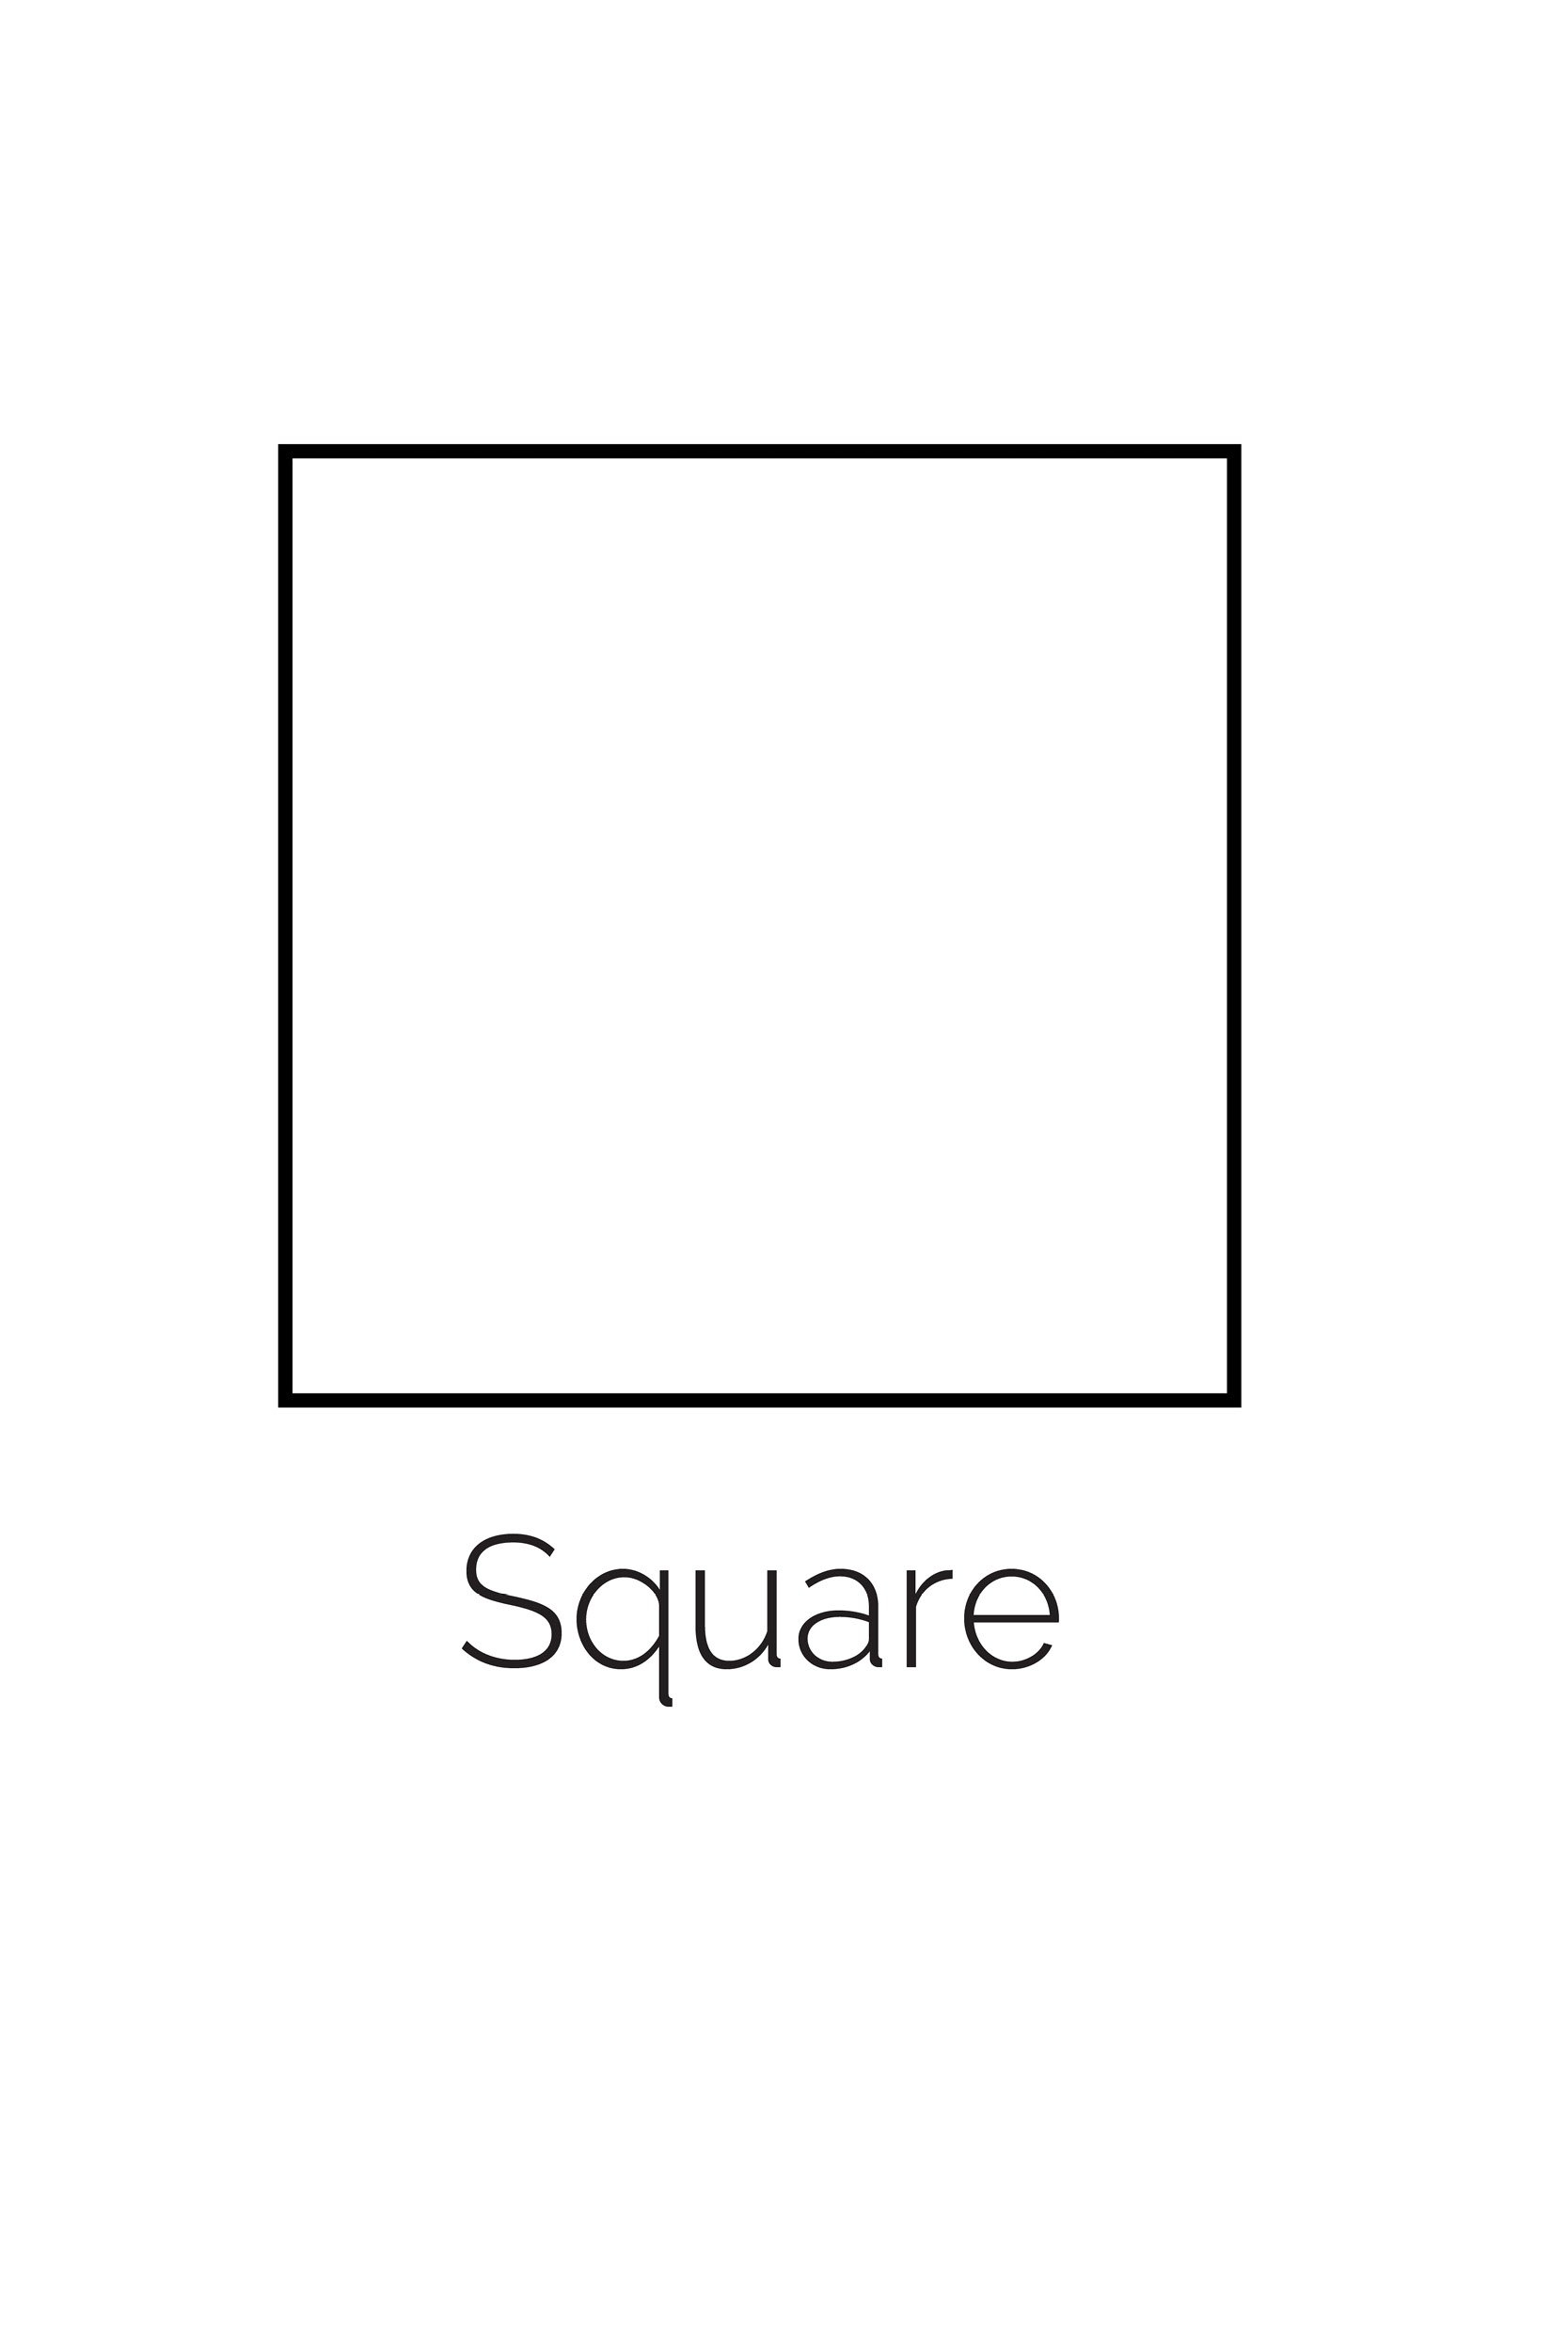 Free Printable Square Worksheets